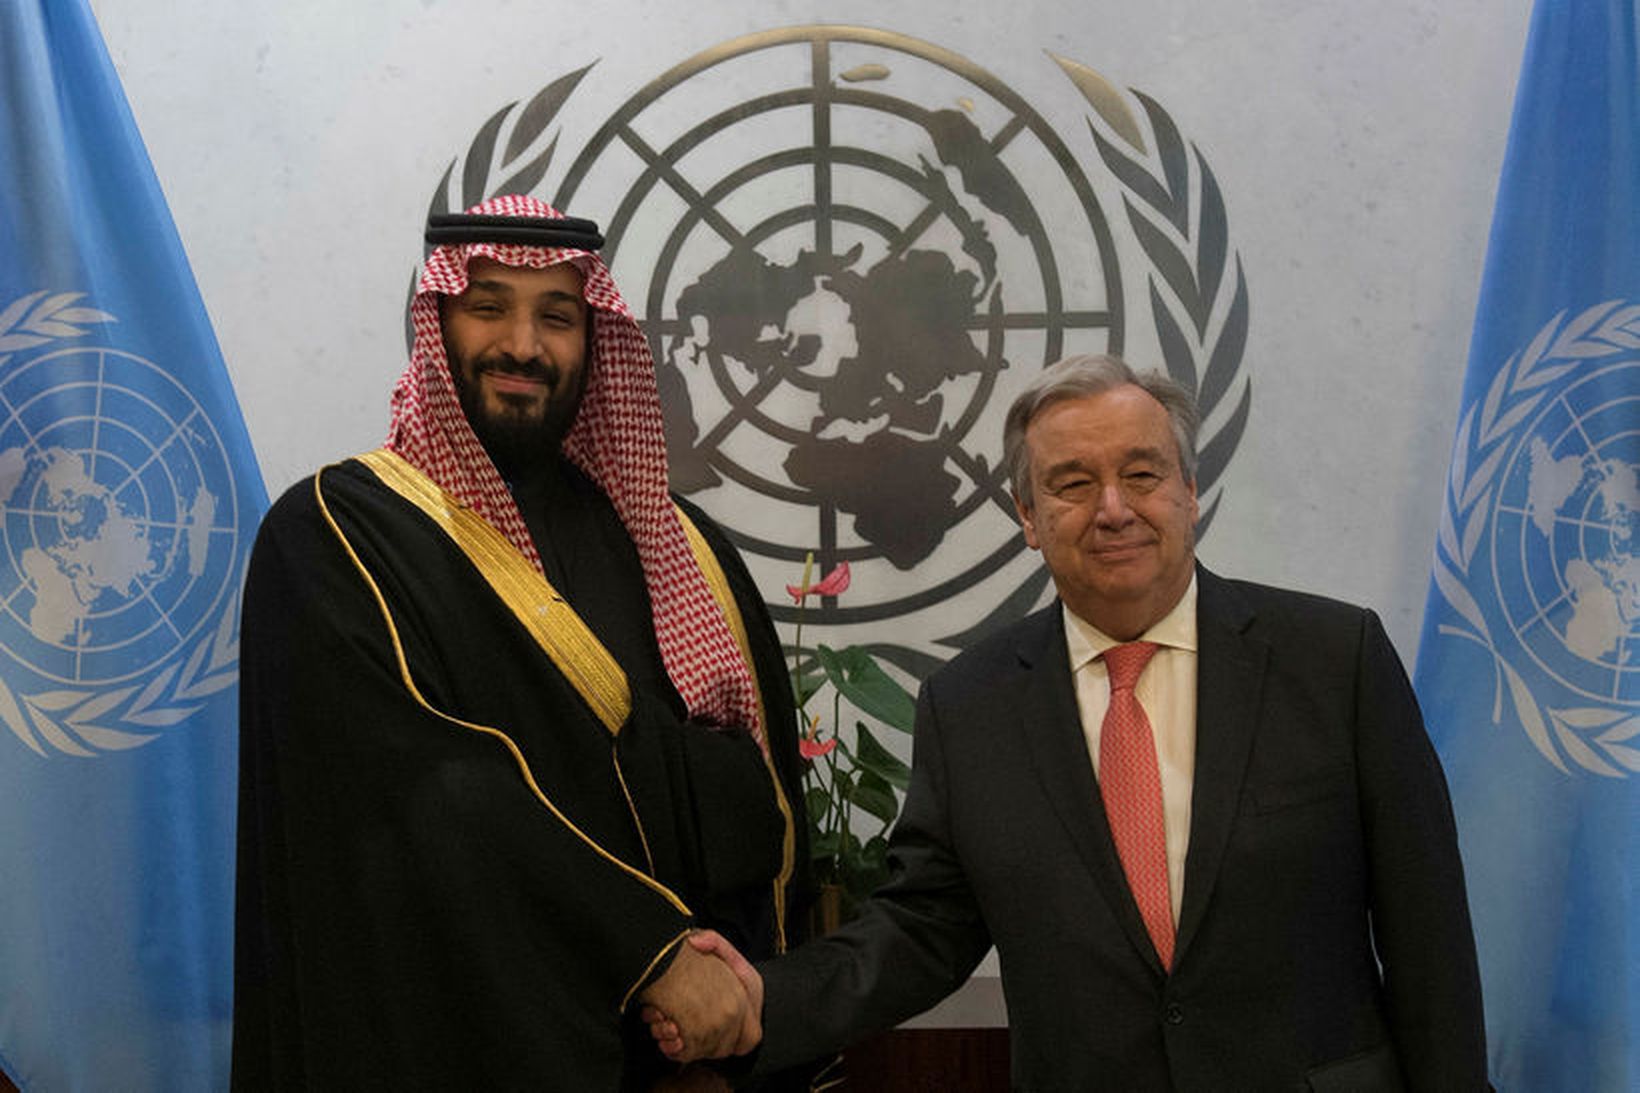 Mohammed bin Salman Al Saud, krónprins Sádi-Arabíu, færði Antonio Guterres, …